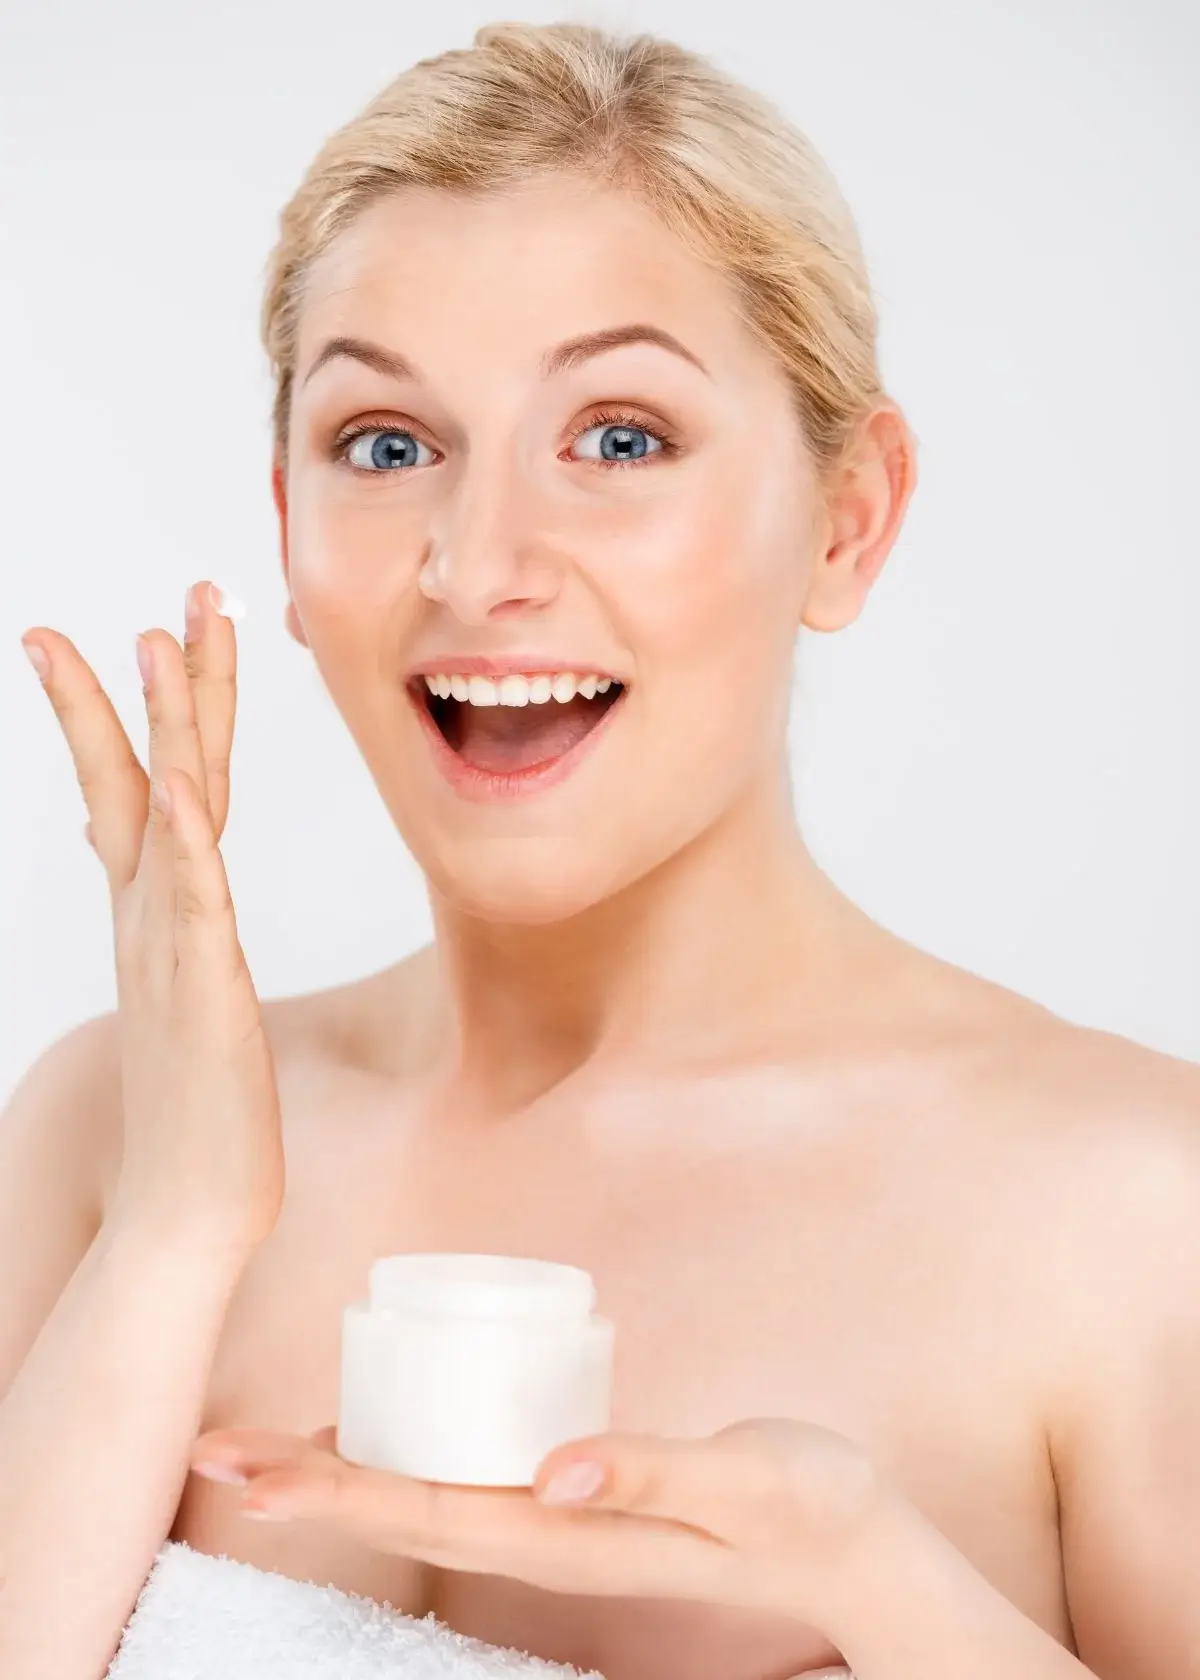 Can collagen eye cream completely eliminate wrinkles?